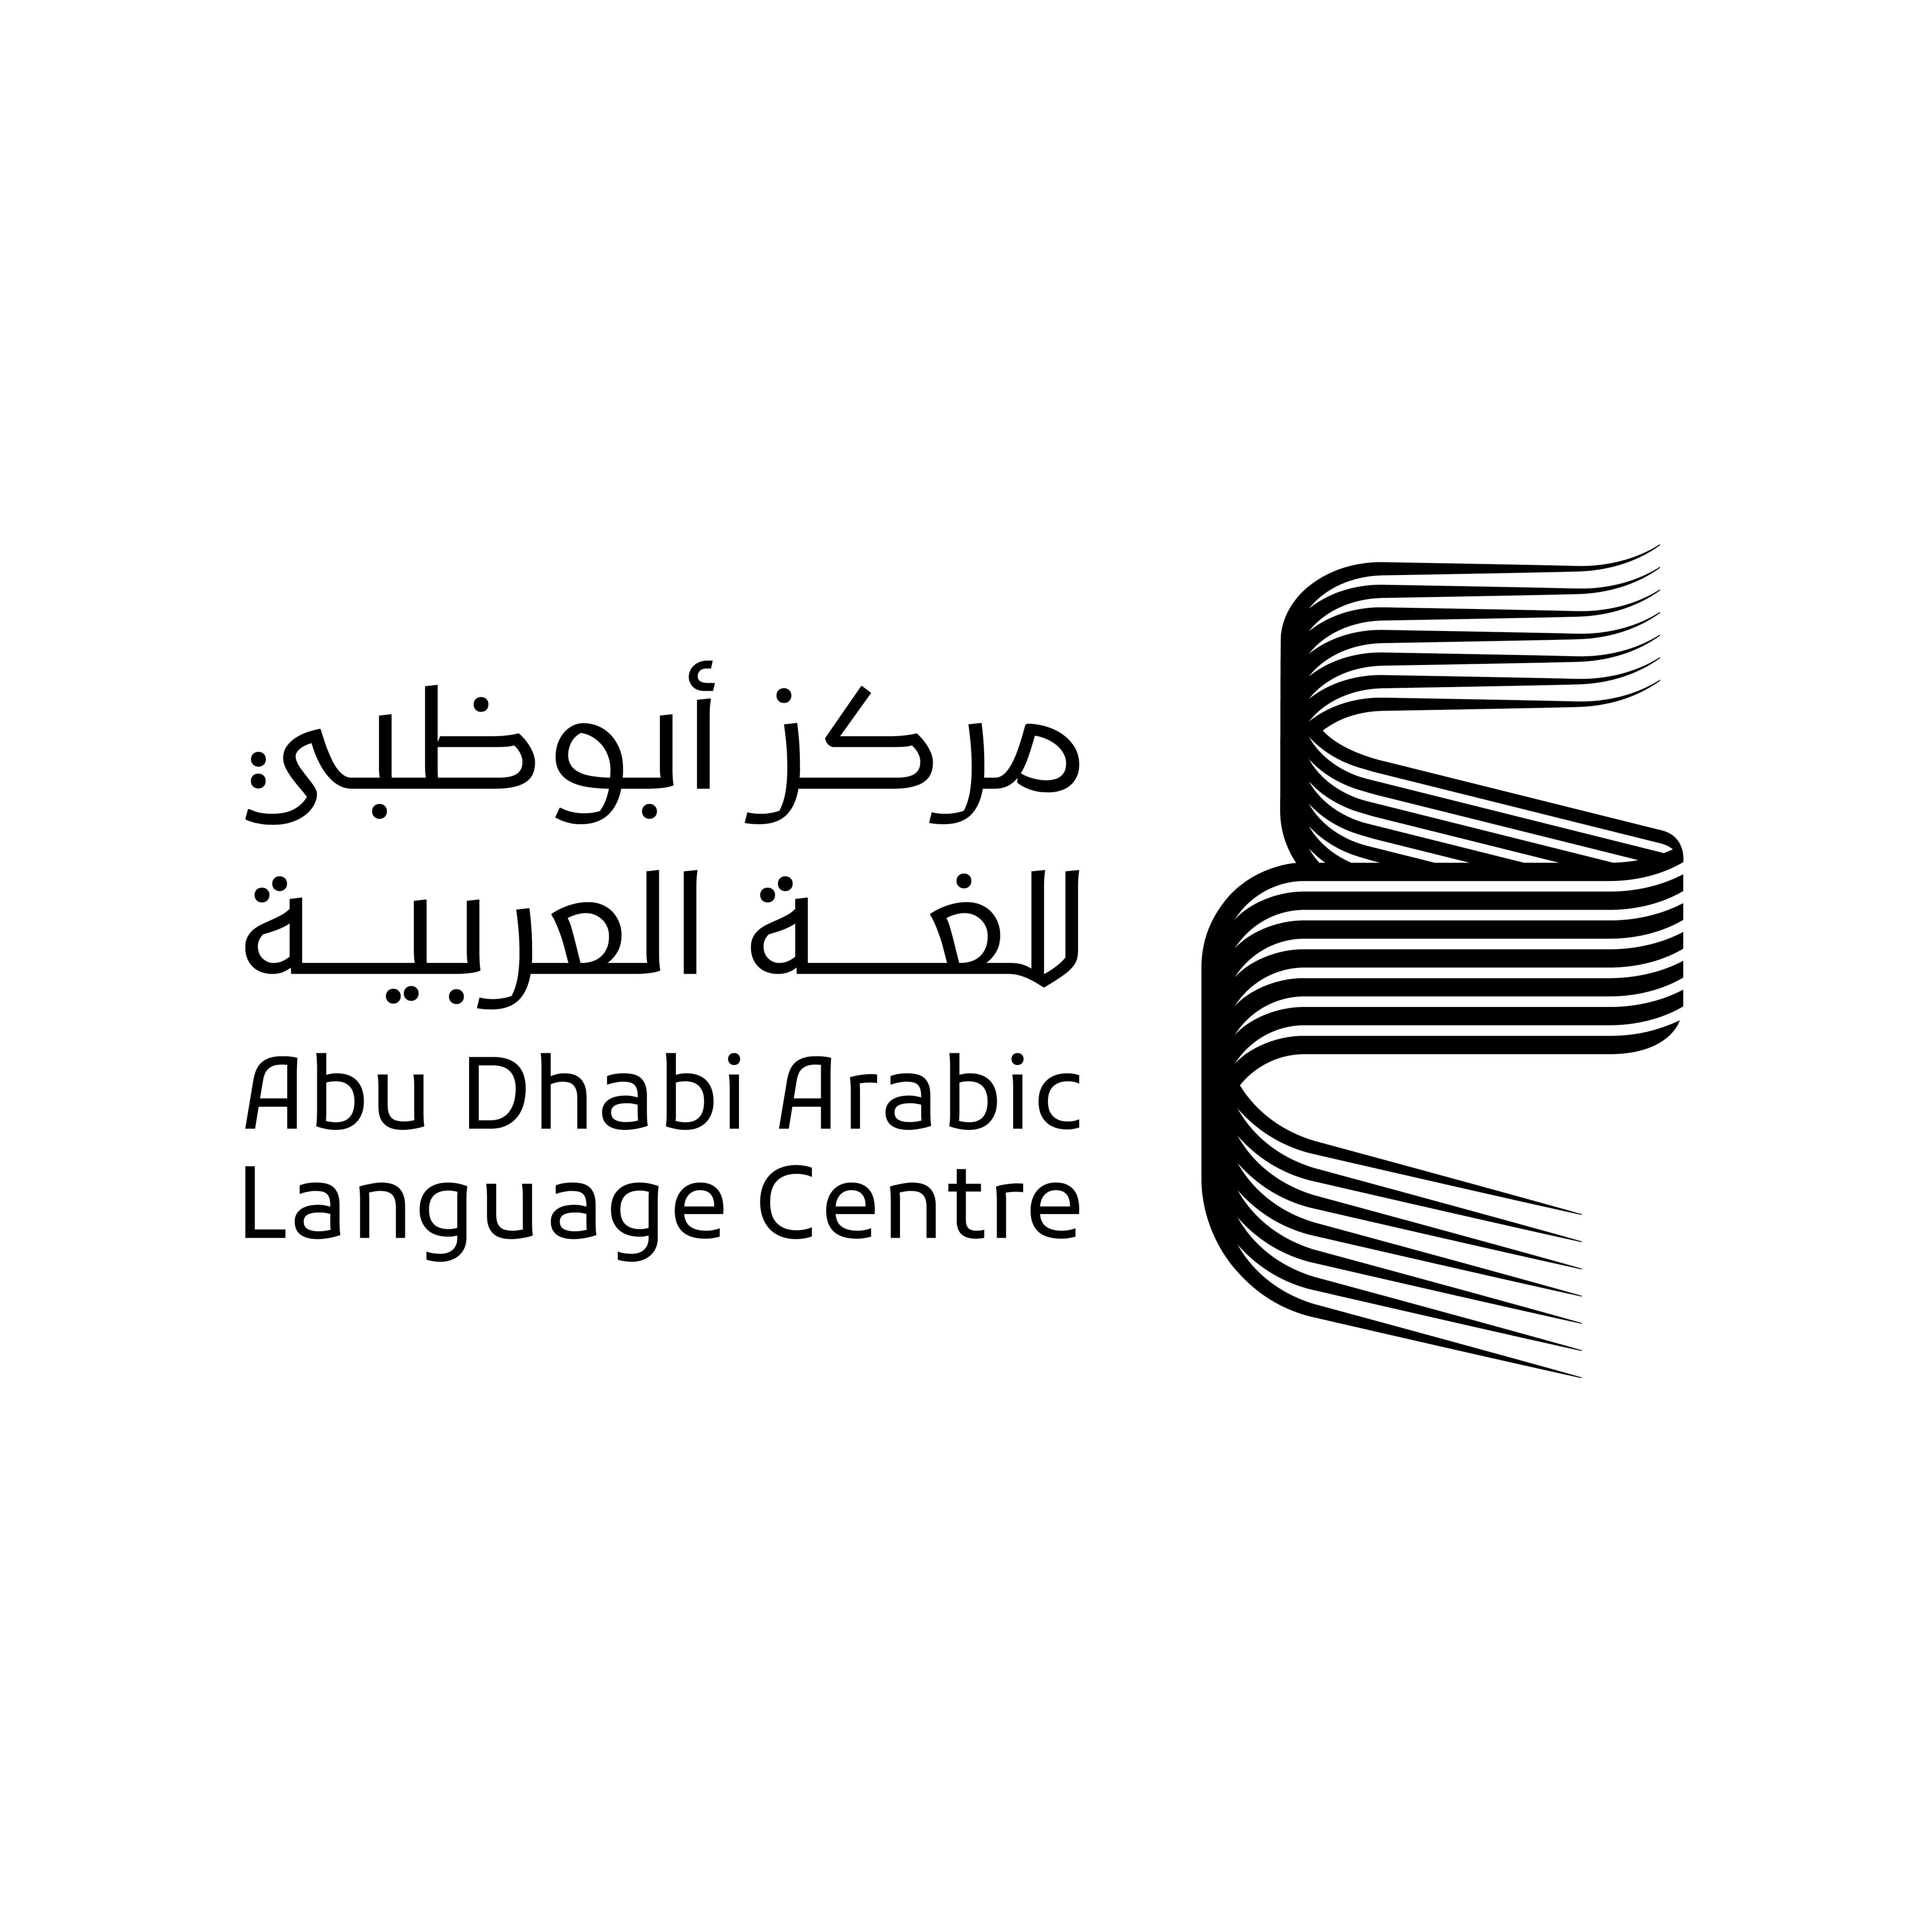 Abu Dhabi Arabic Language Centre Forms Key Partnership With Brill Publishing House